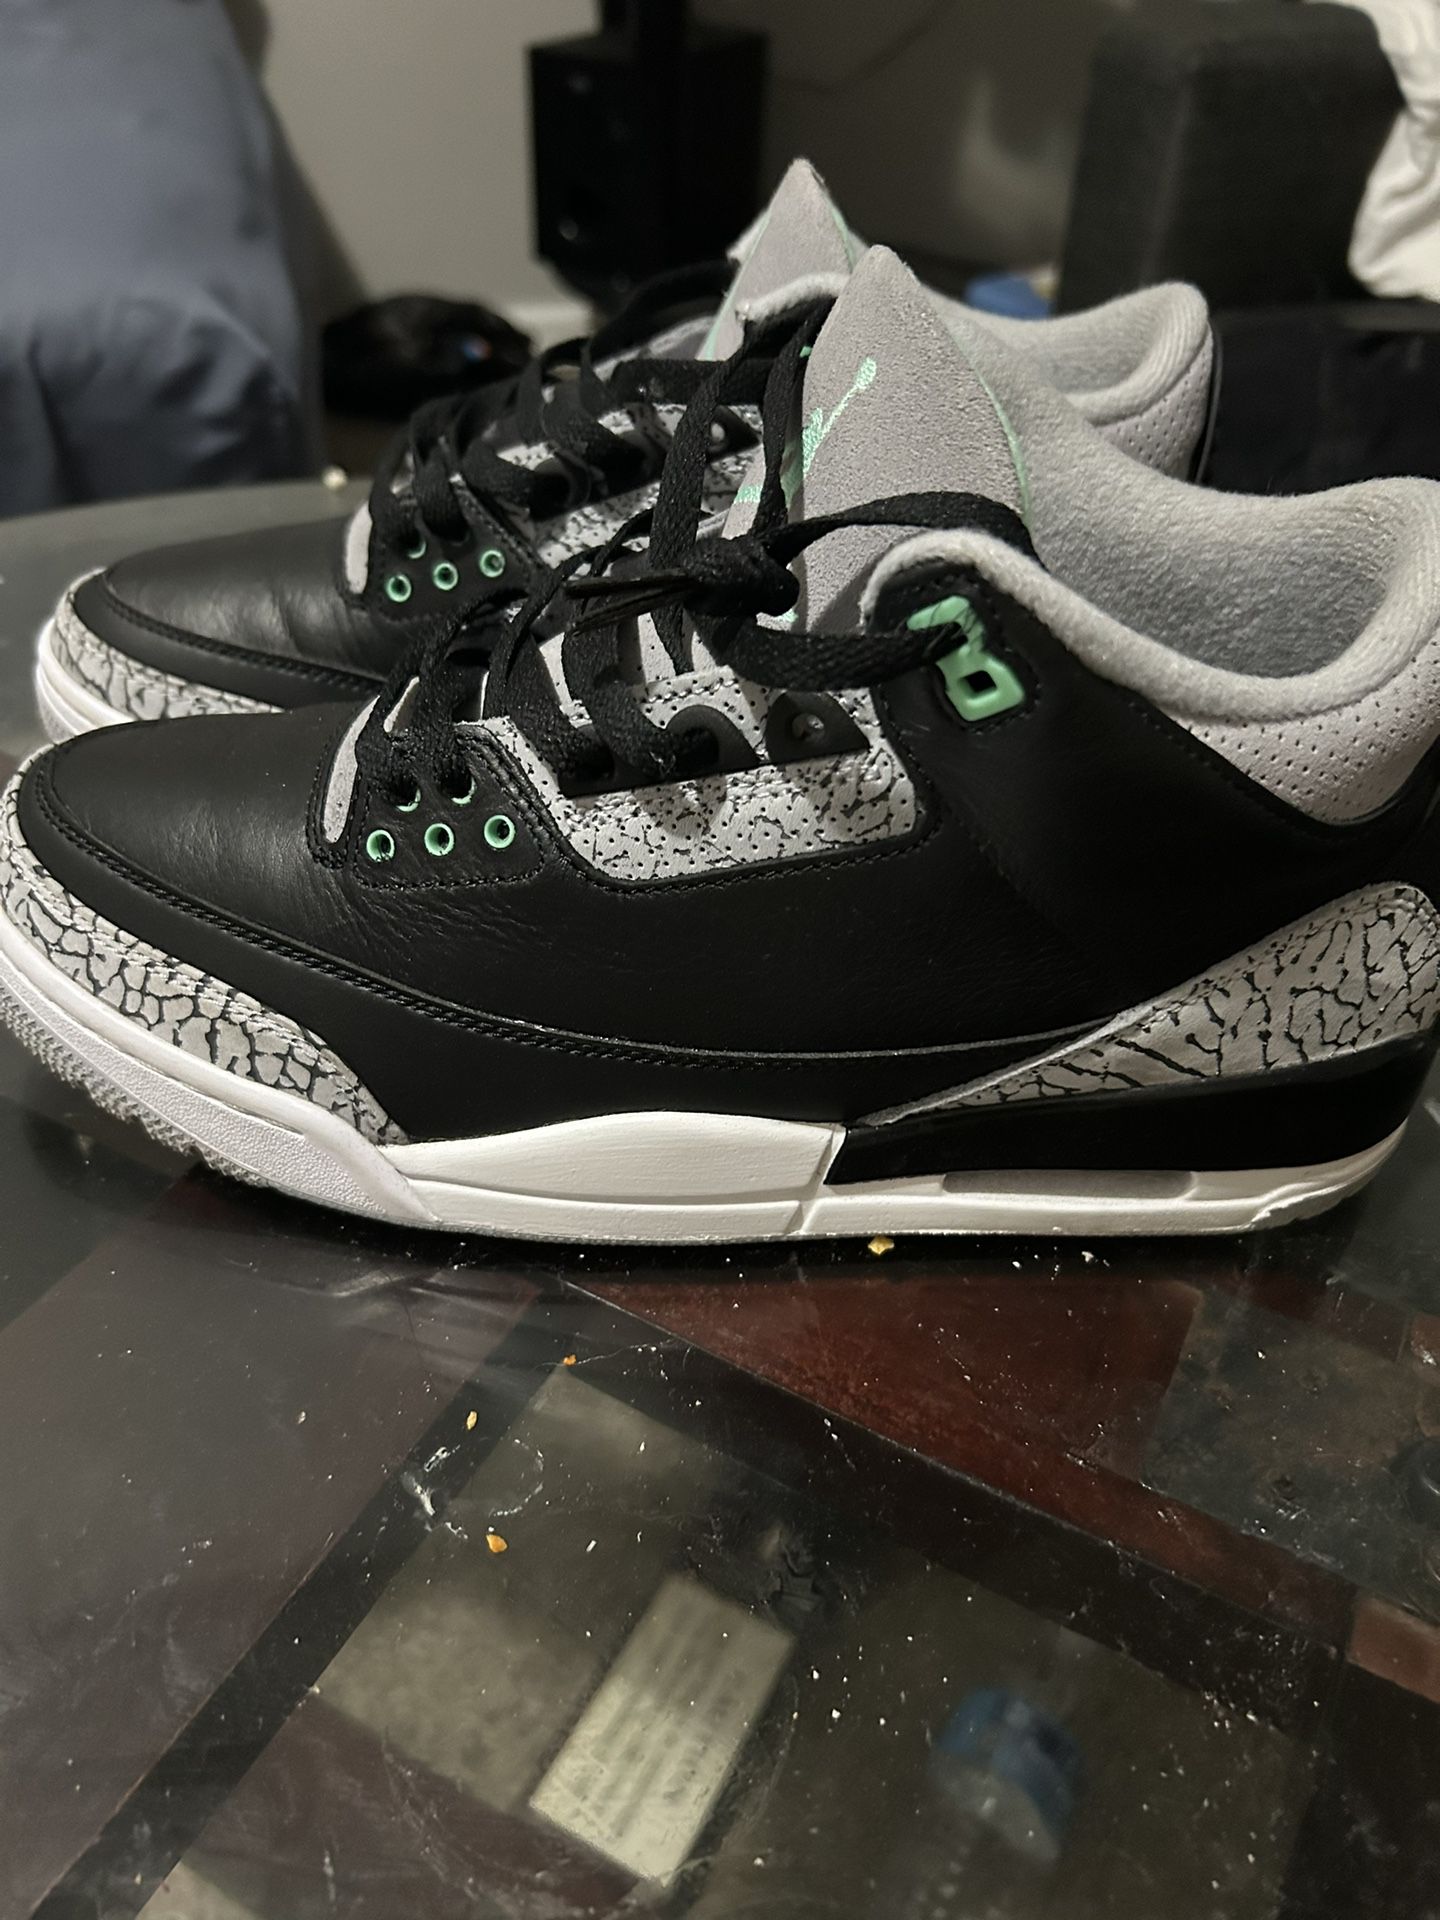 Green Glow Jordan 3s